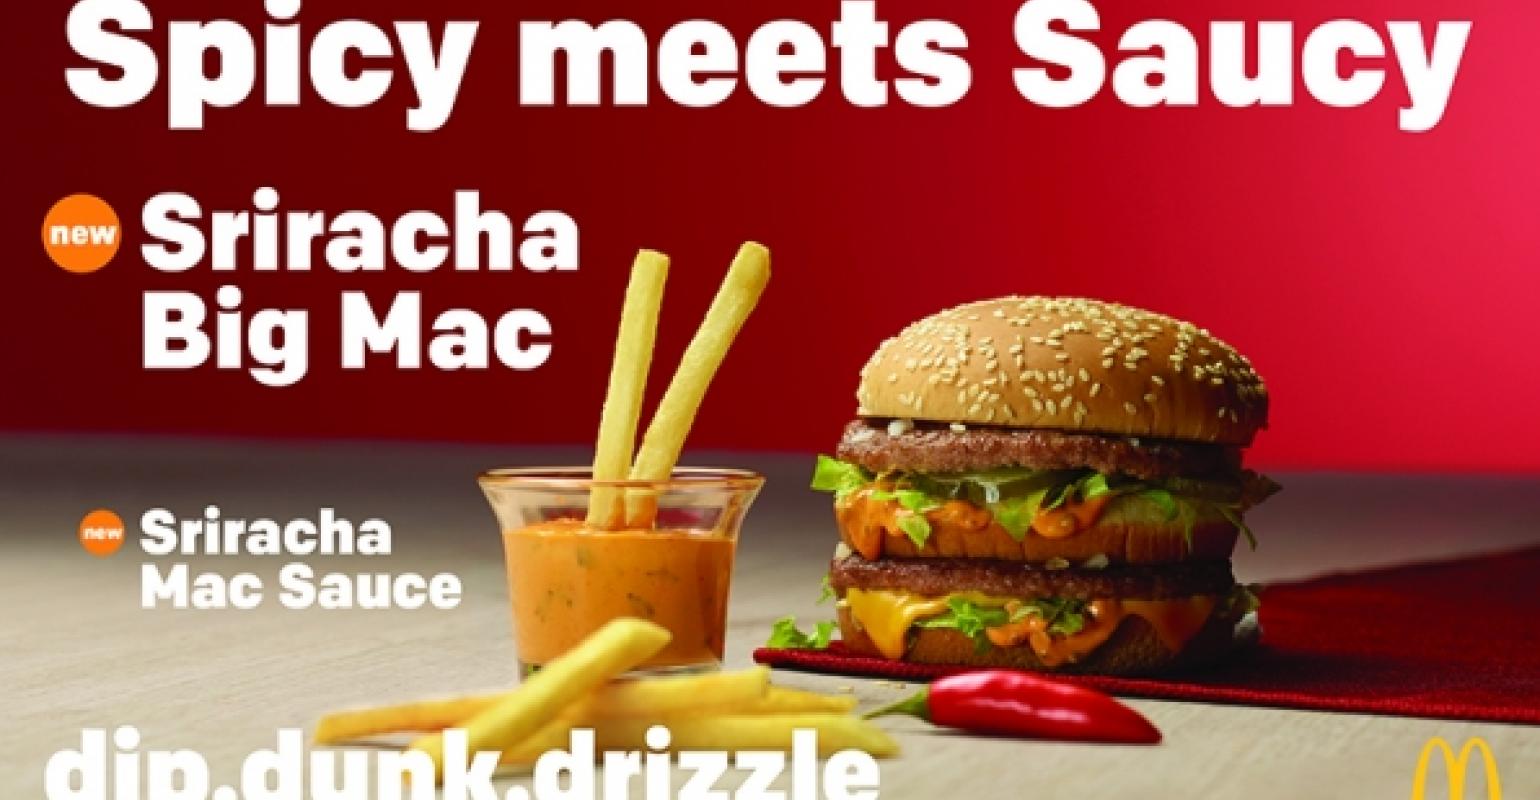 big mac sauce for sale 2016 in america